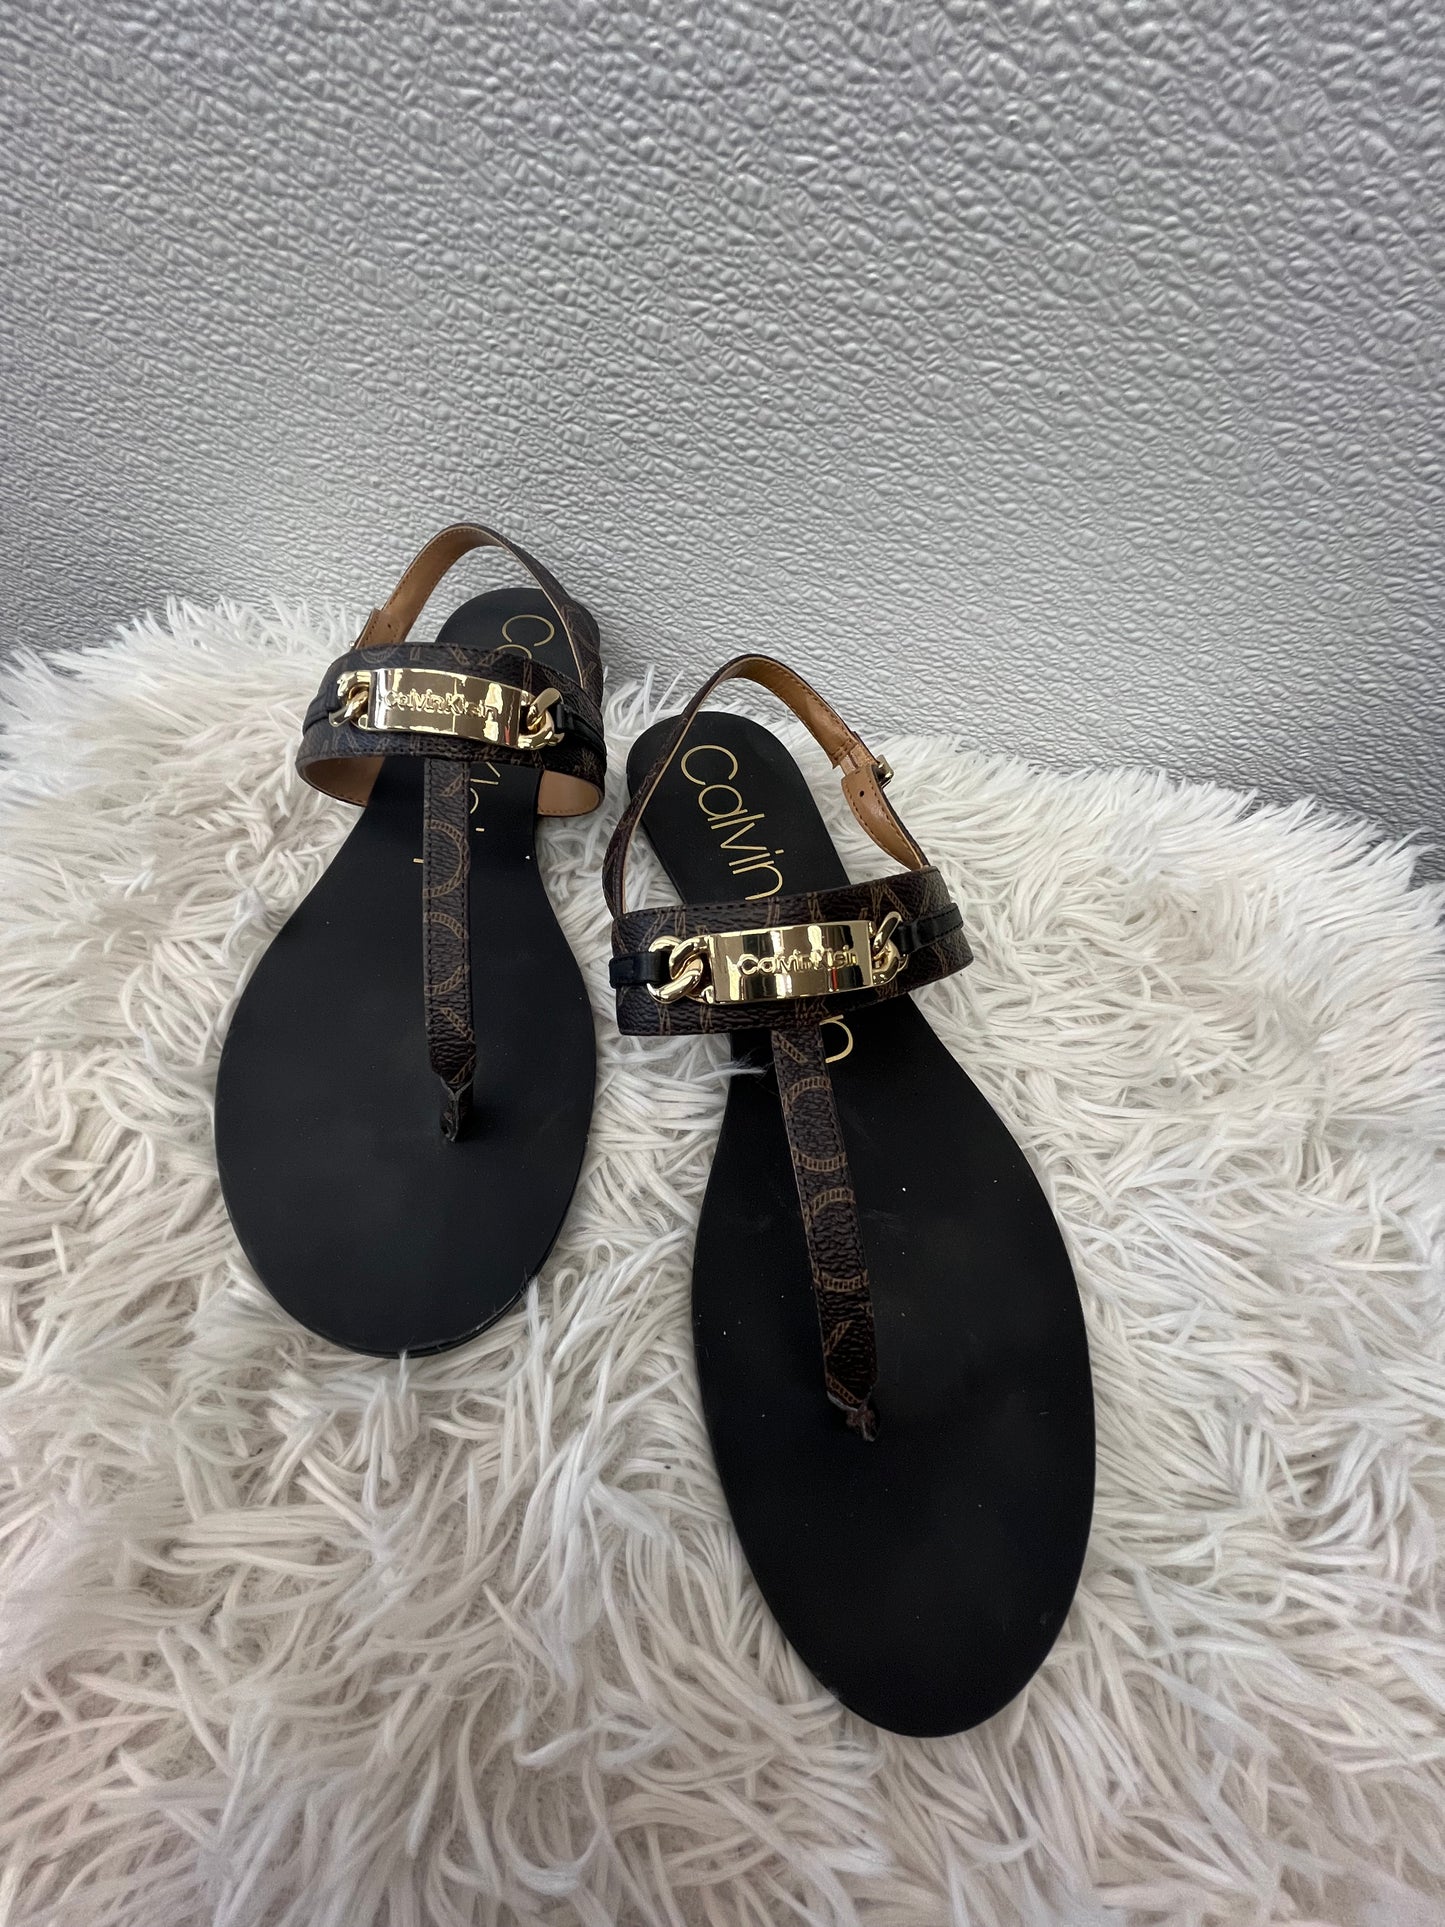 Sandals Flats By Calvin Klein  Size: 9.5